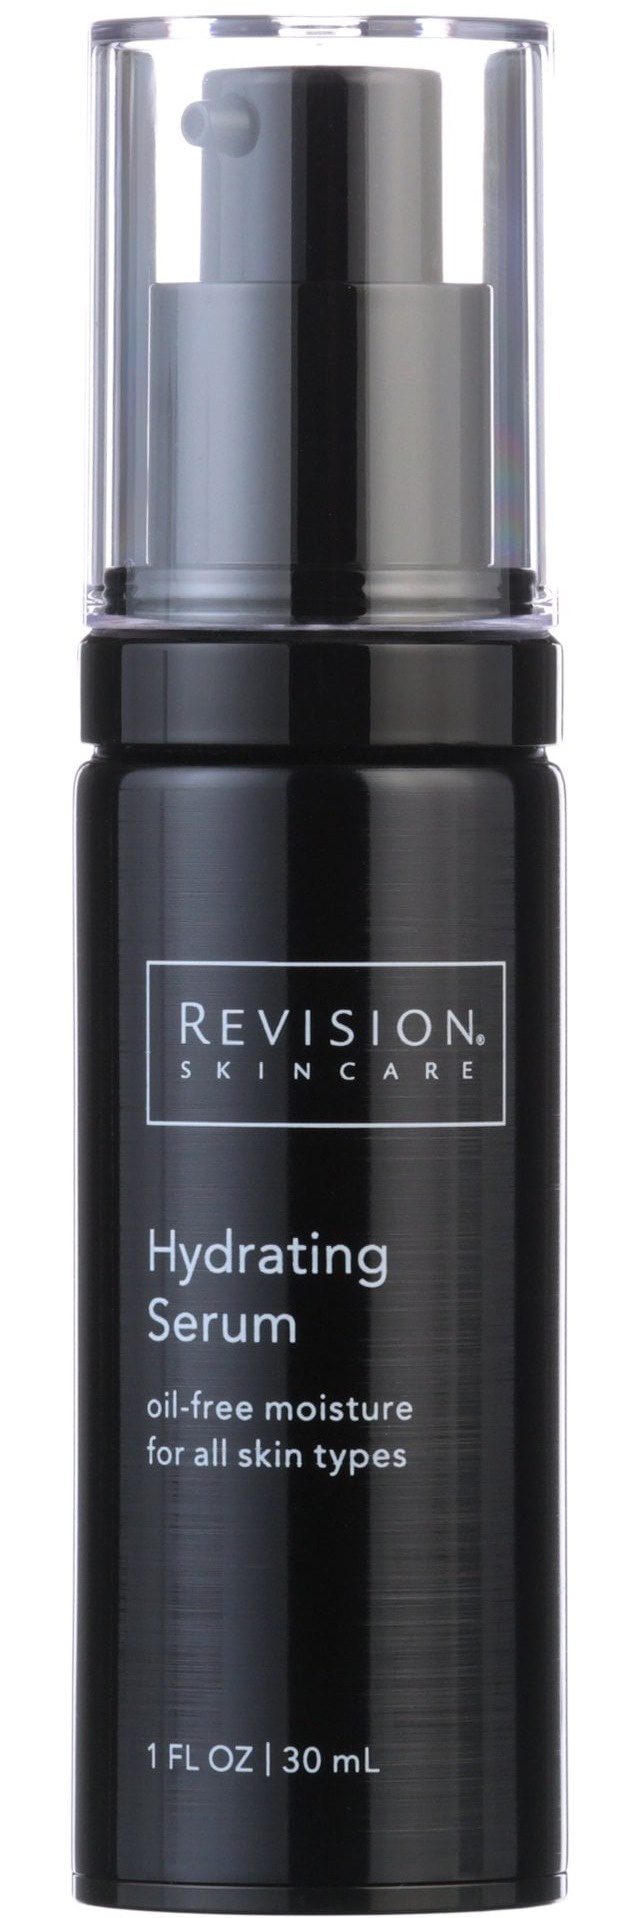 Revision Skincare Hydrating Serum